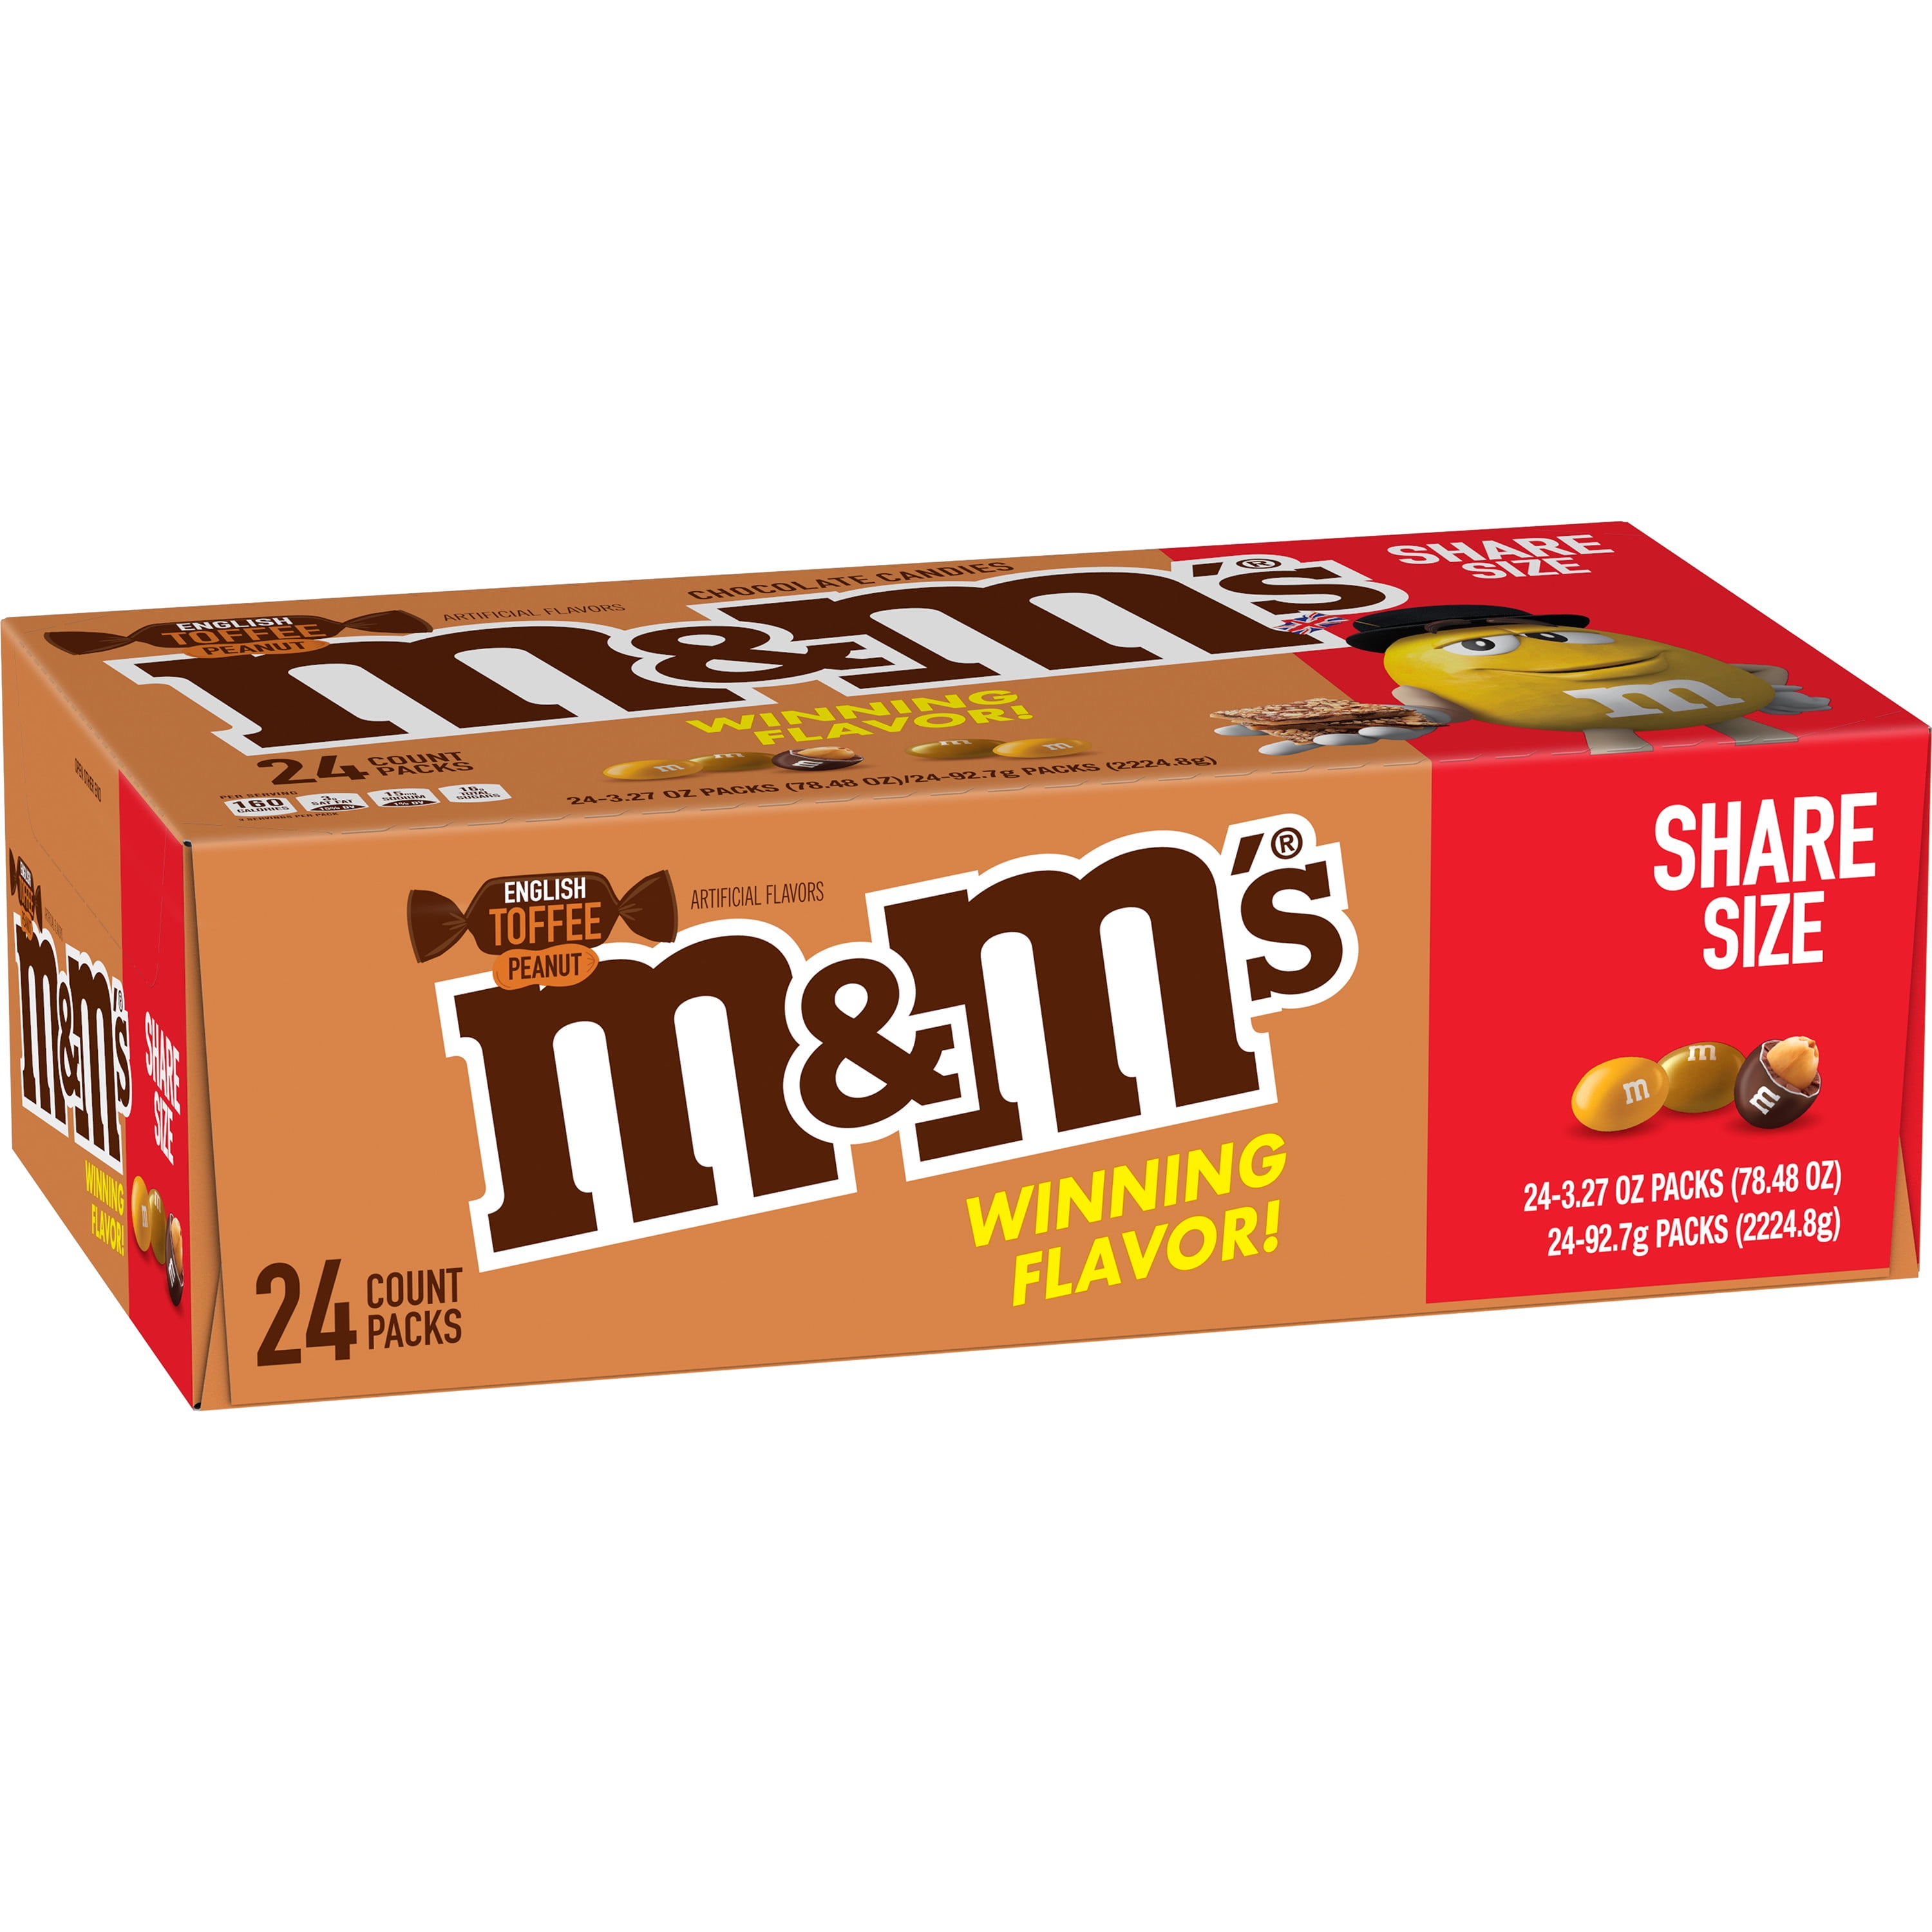 M&M'S Peanut Chocolate Candy Share Size, 3.27 oz